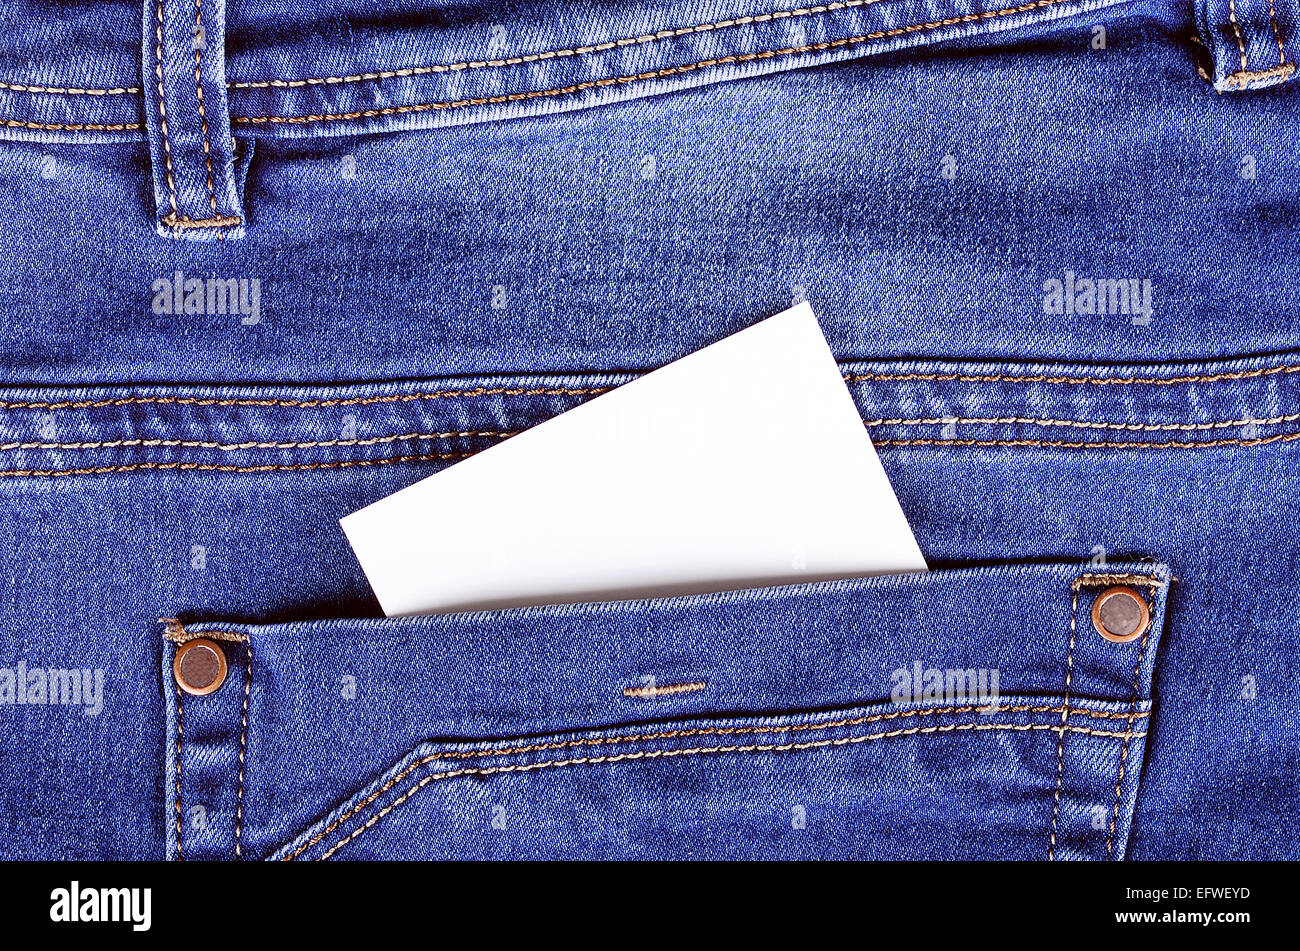 Adhesivo en el bolsillo posterior blue jeans, detalle Foto de stock